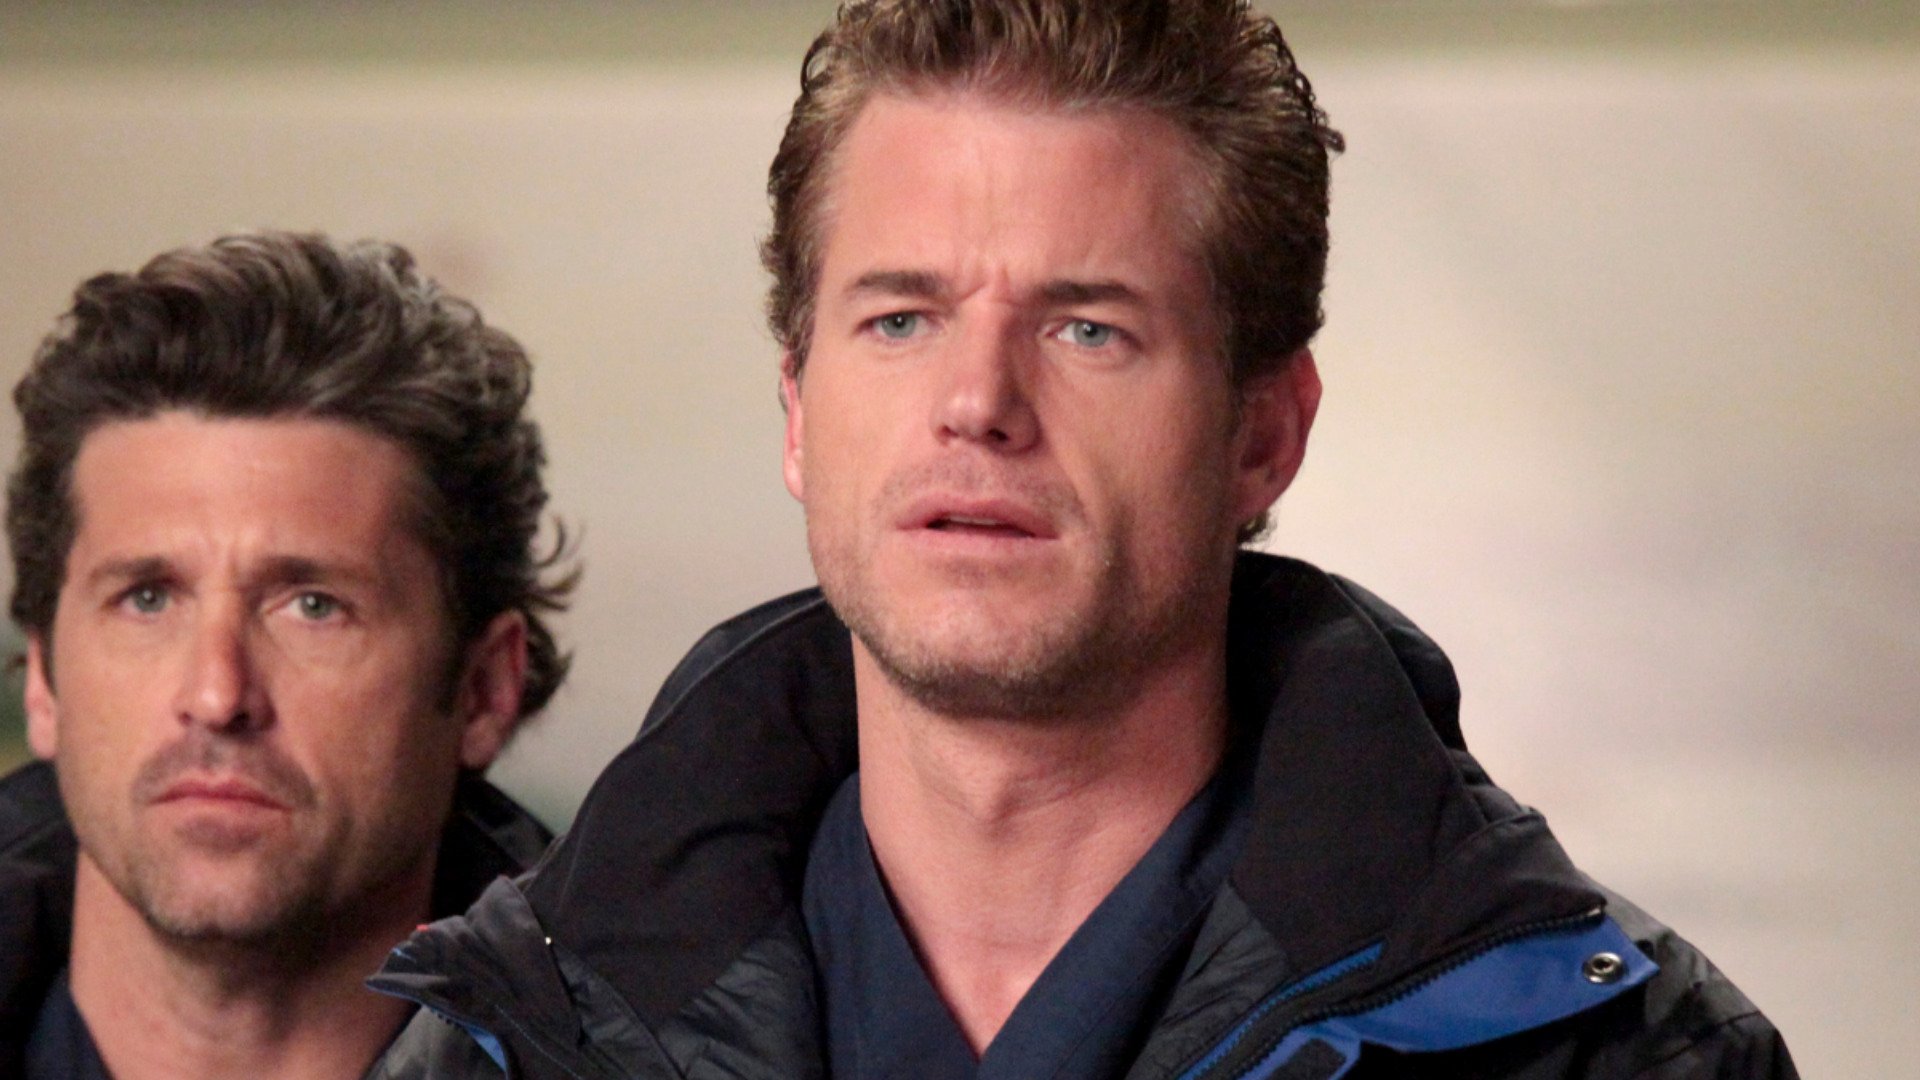 Eric Dane as Mark Sloan looking shocked in ‘Grey’s Anatomy’ with Patrick Dempsey as Derek Shepherd in the background